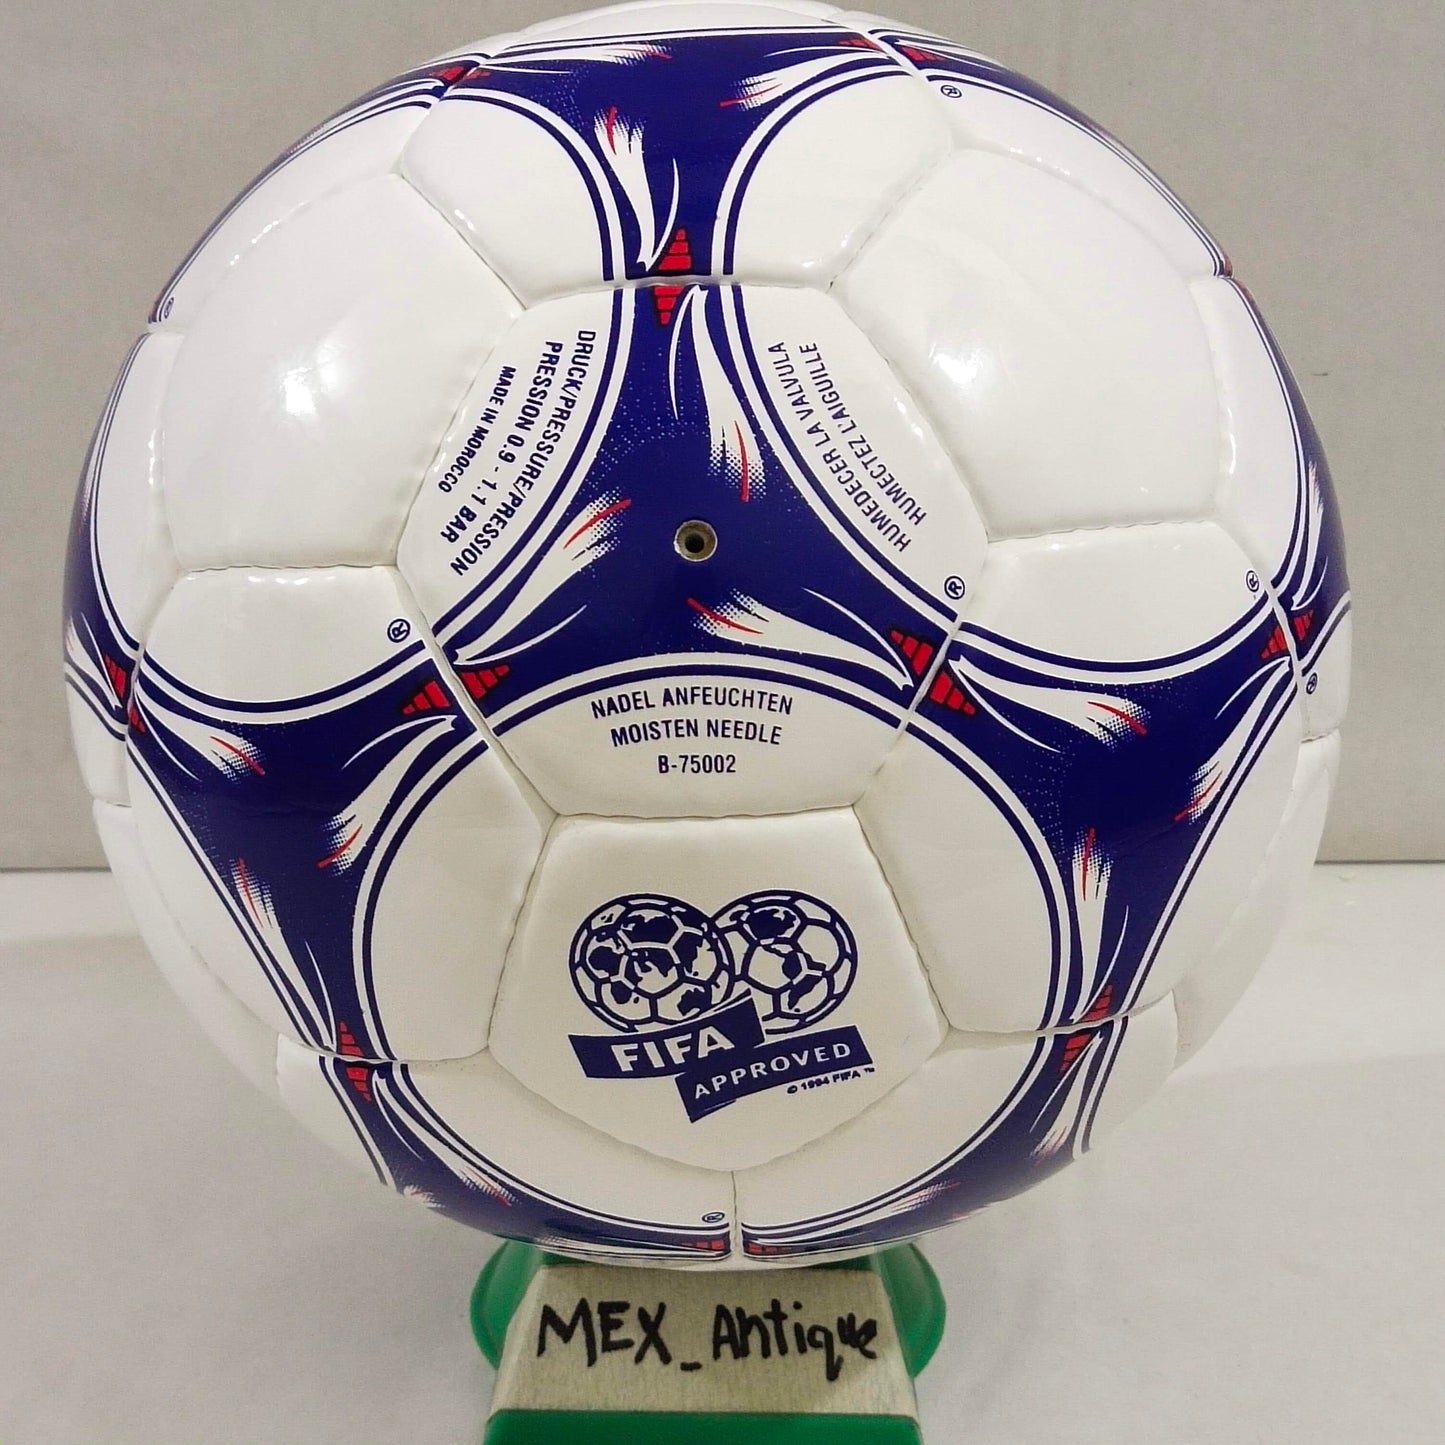 Adidas Tricolore | 1998 FIFA World Cup Ball | Made in Morrocco 03